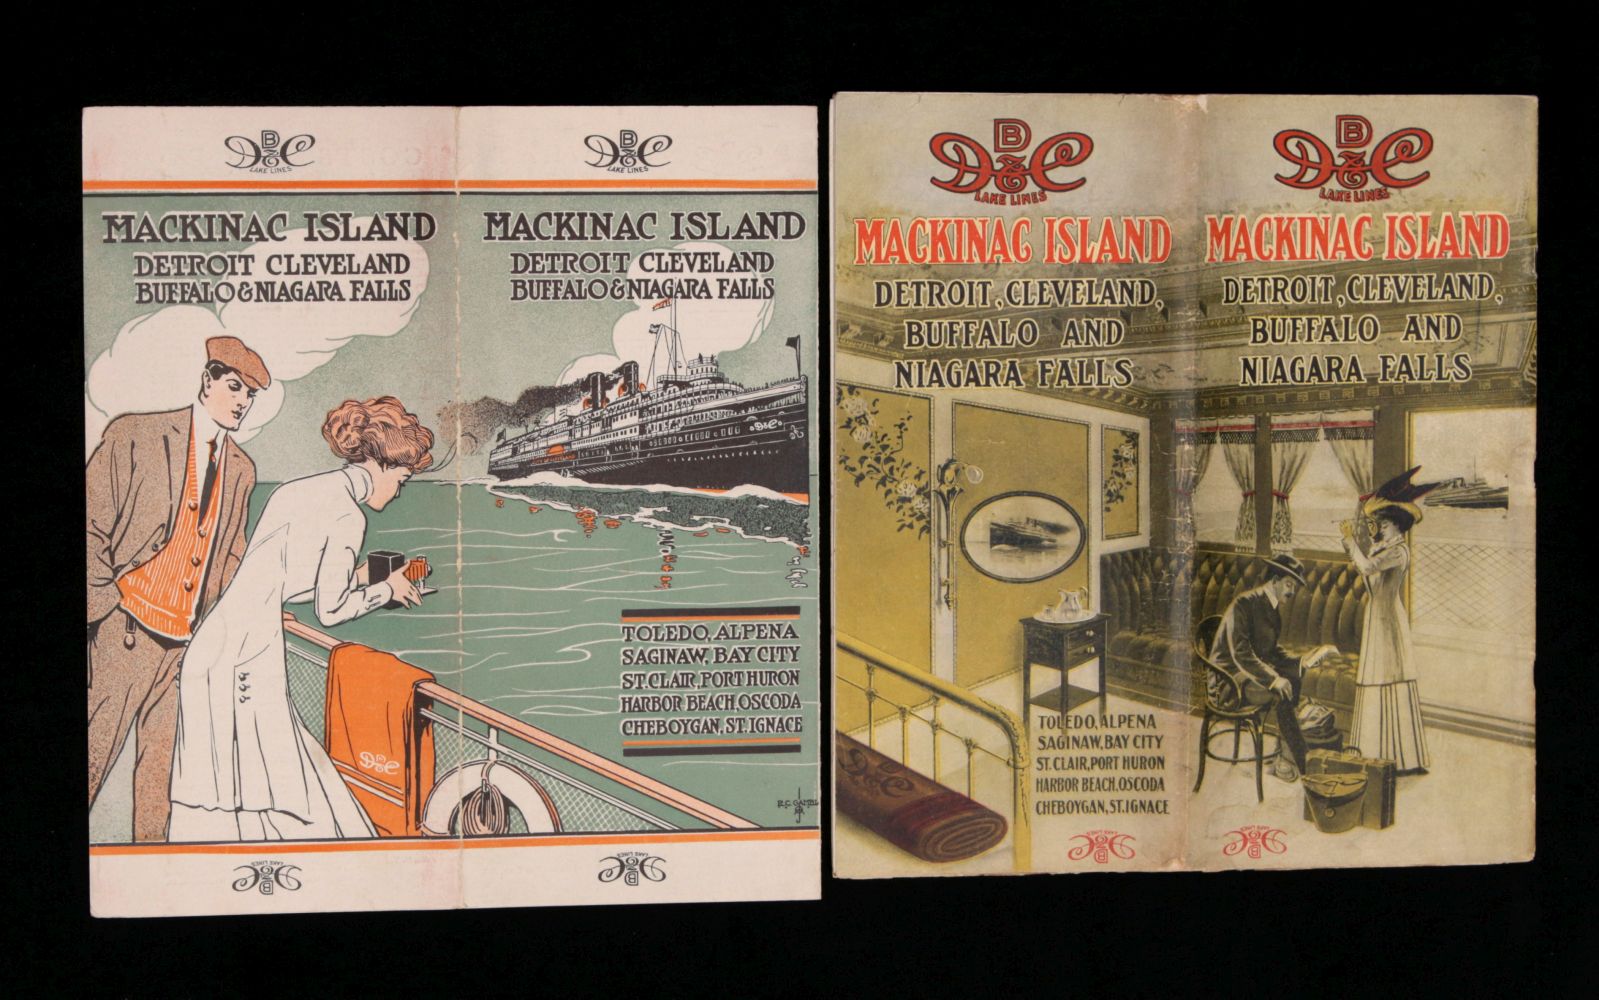 DETROIT & CLEVELAND STEAMSHIP TO MACKINAC ISLAND C 1910